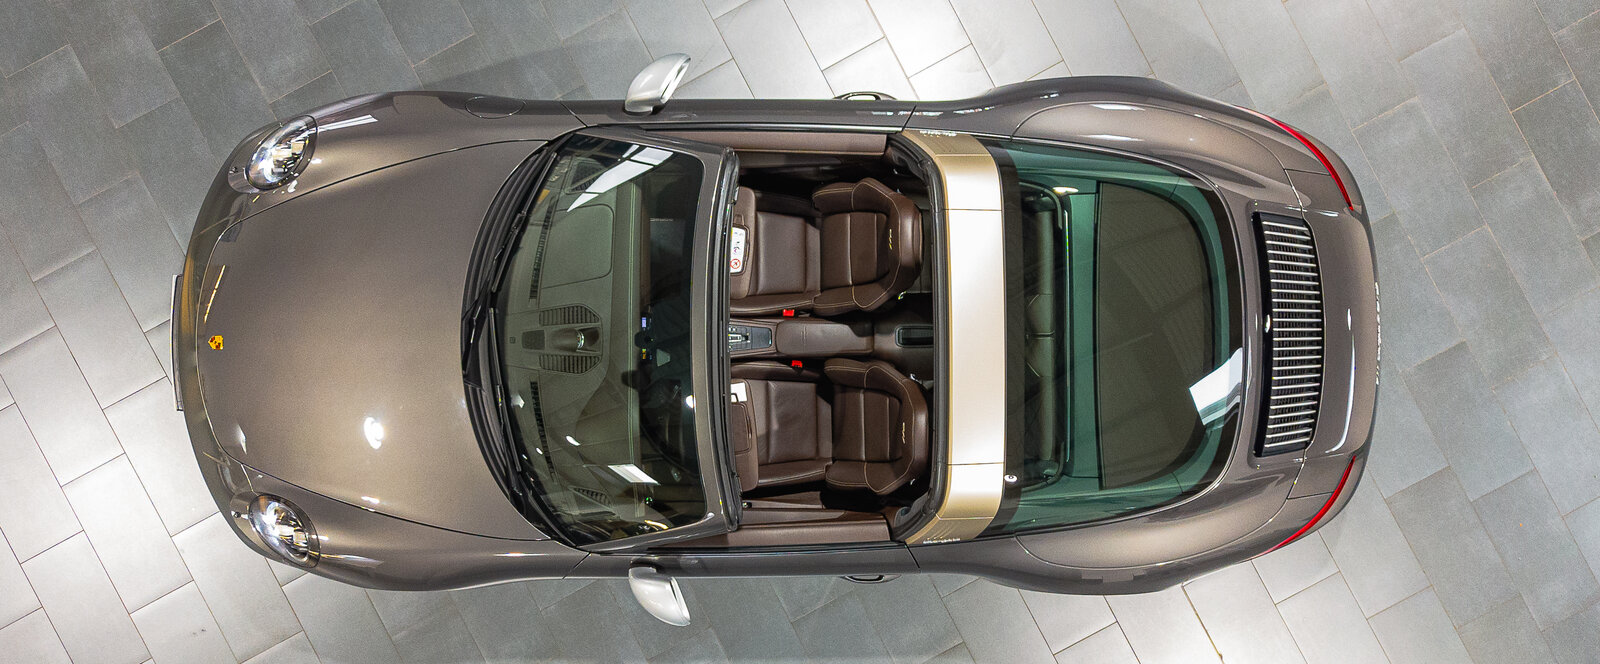 911 Targa 4 GTS Exclusive Manufaktur Edition